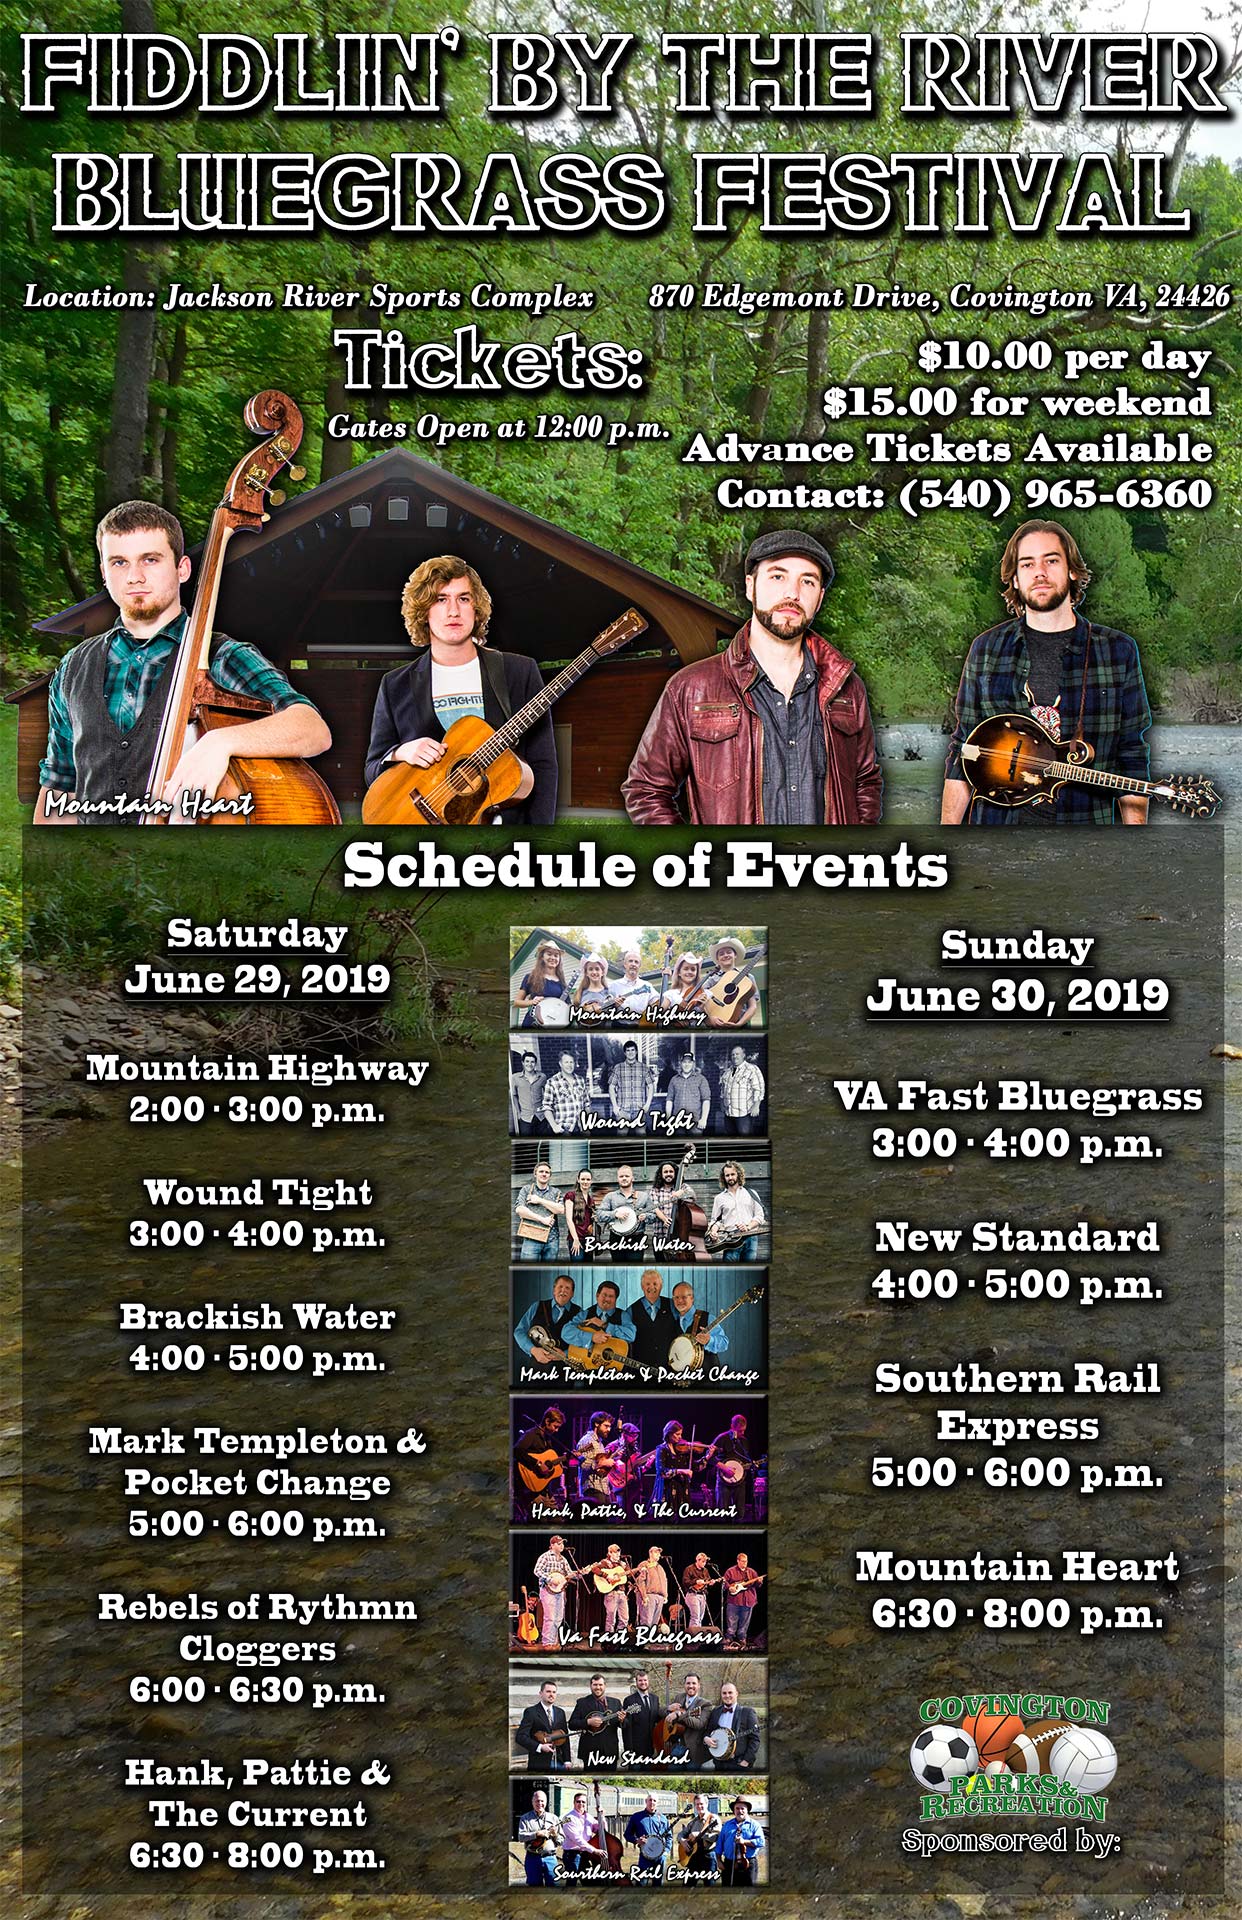 Fiddlin' by the River Bluegrass Festival - Covington City